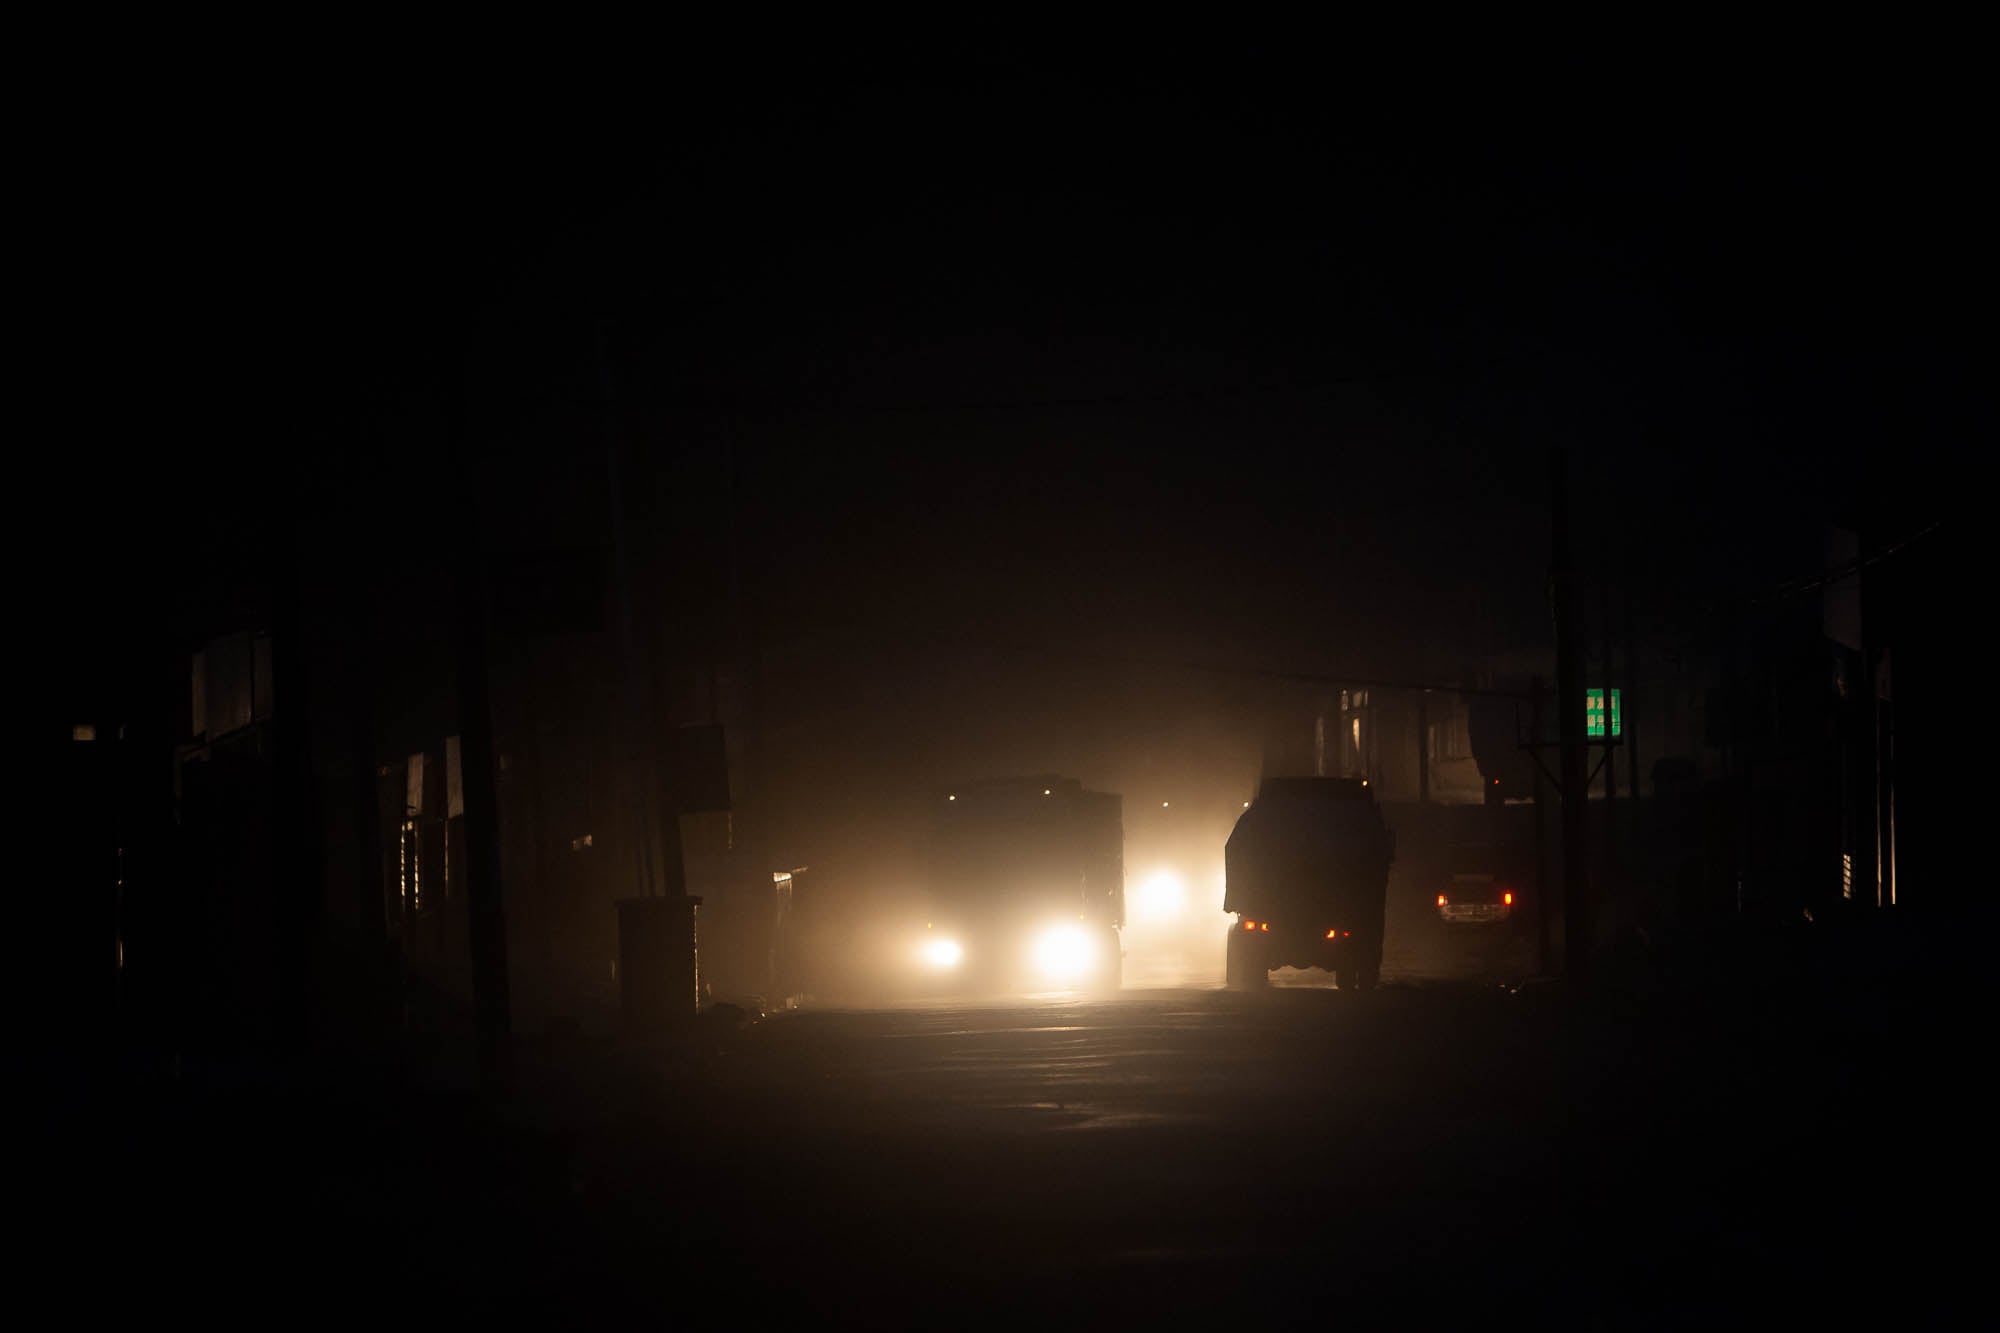 trucks in the darkness